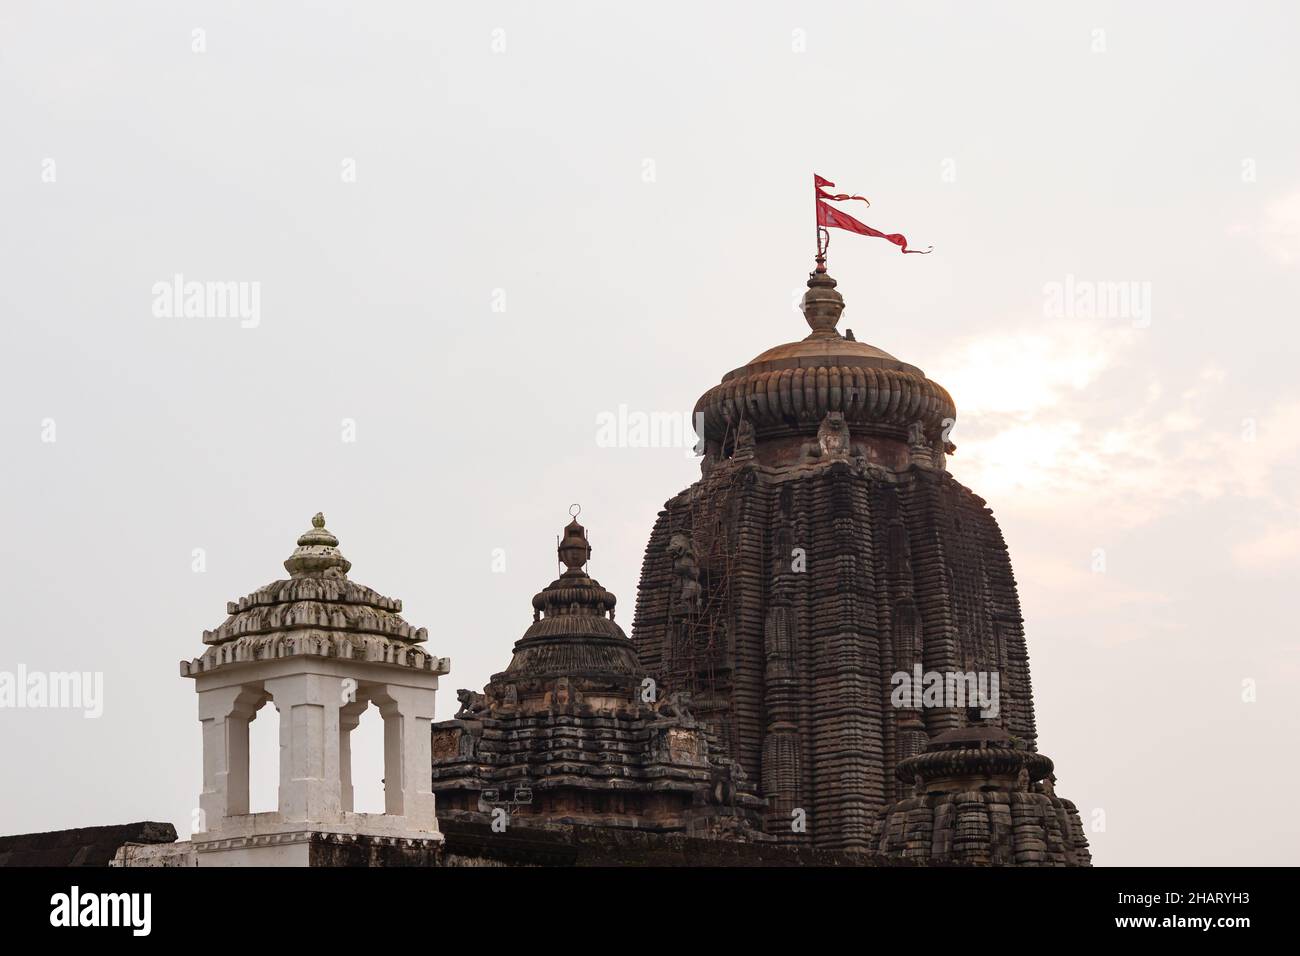 Jagannath temple at Puri, Odisha, India. Stock Photo